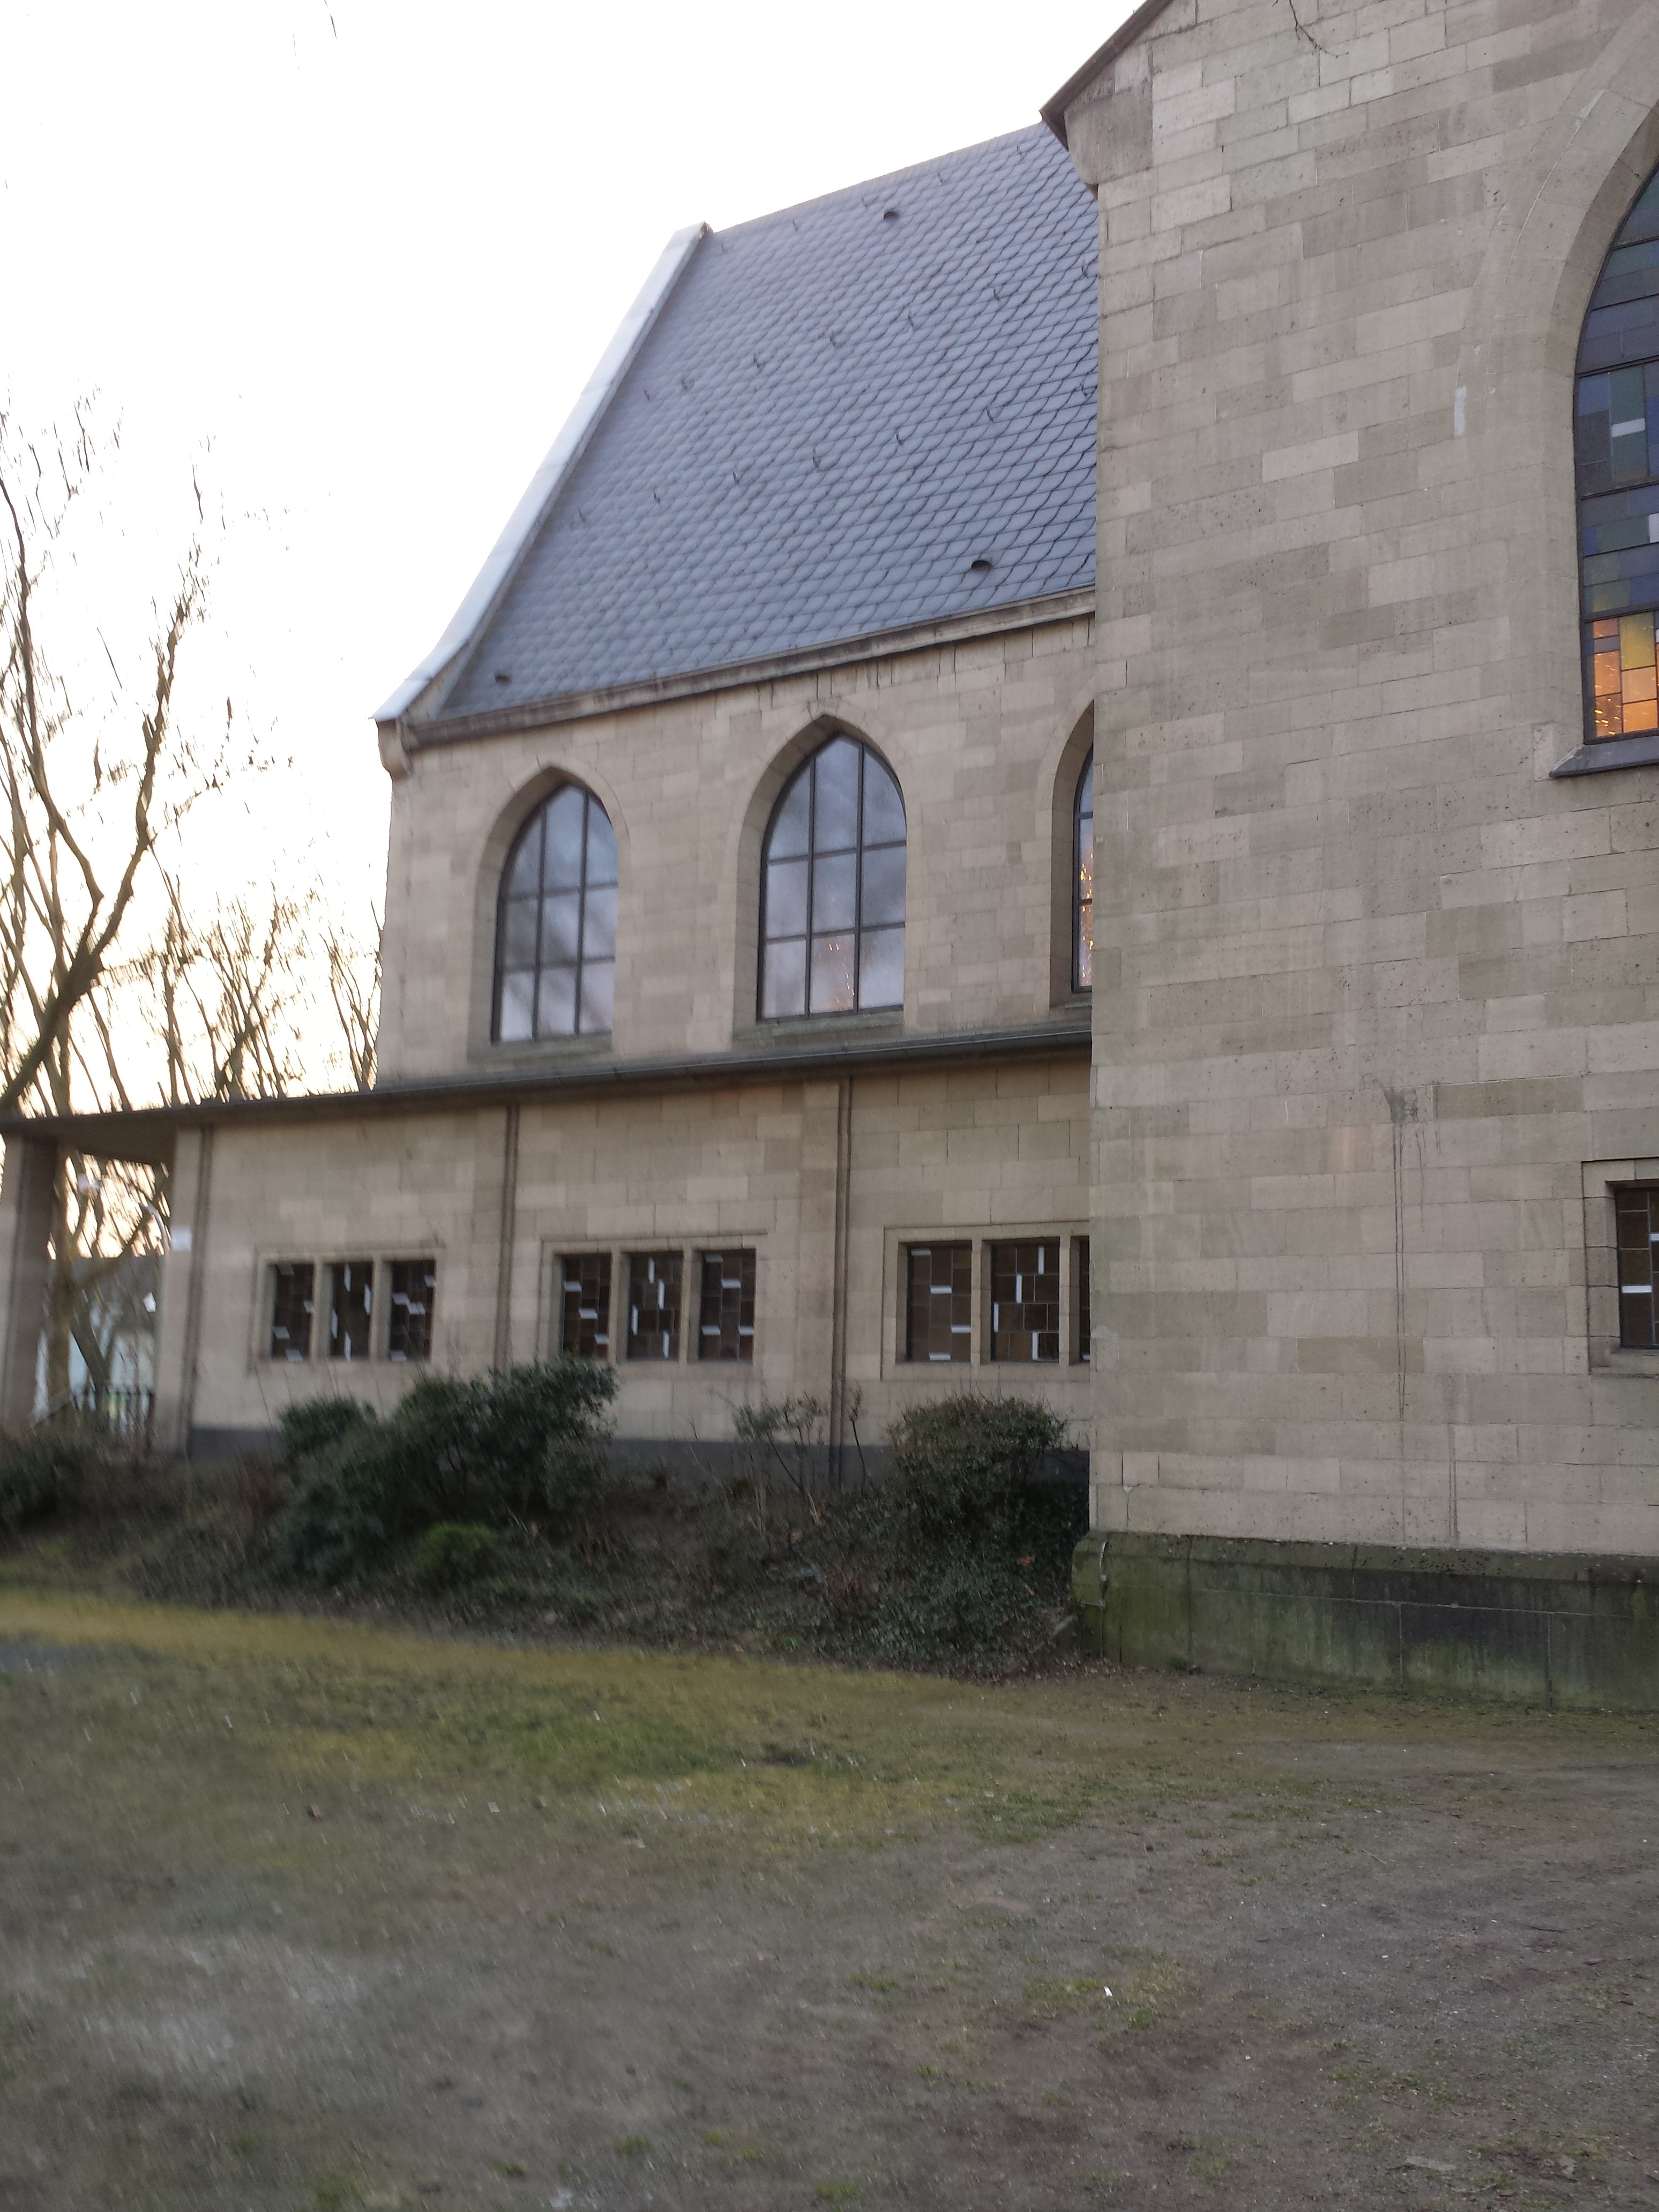 Bild 3 Gnadenkirche Wanheimerort - Evangelische Gemeinde Duisburg-Wanheimerort in Duisburg